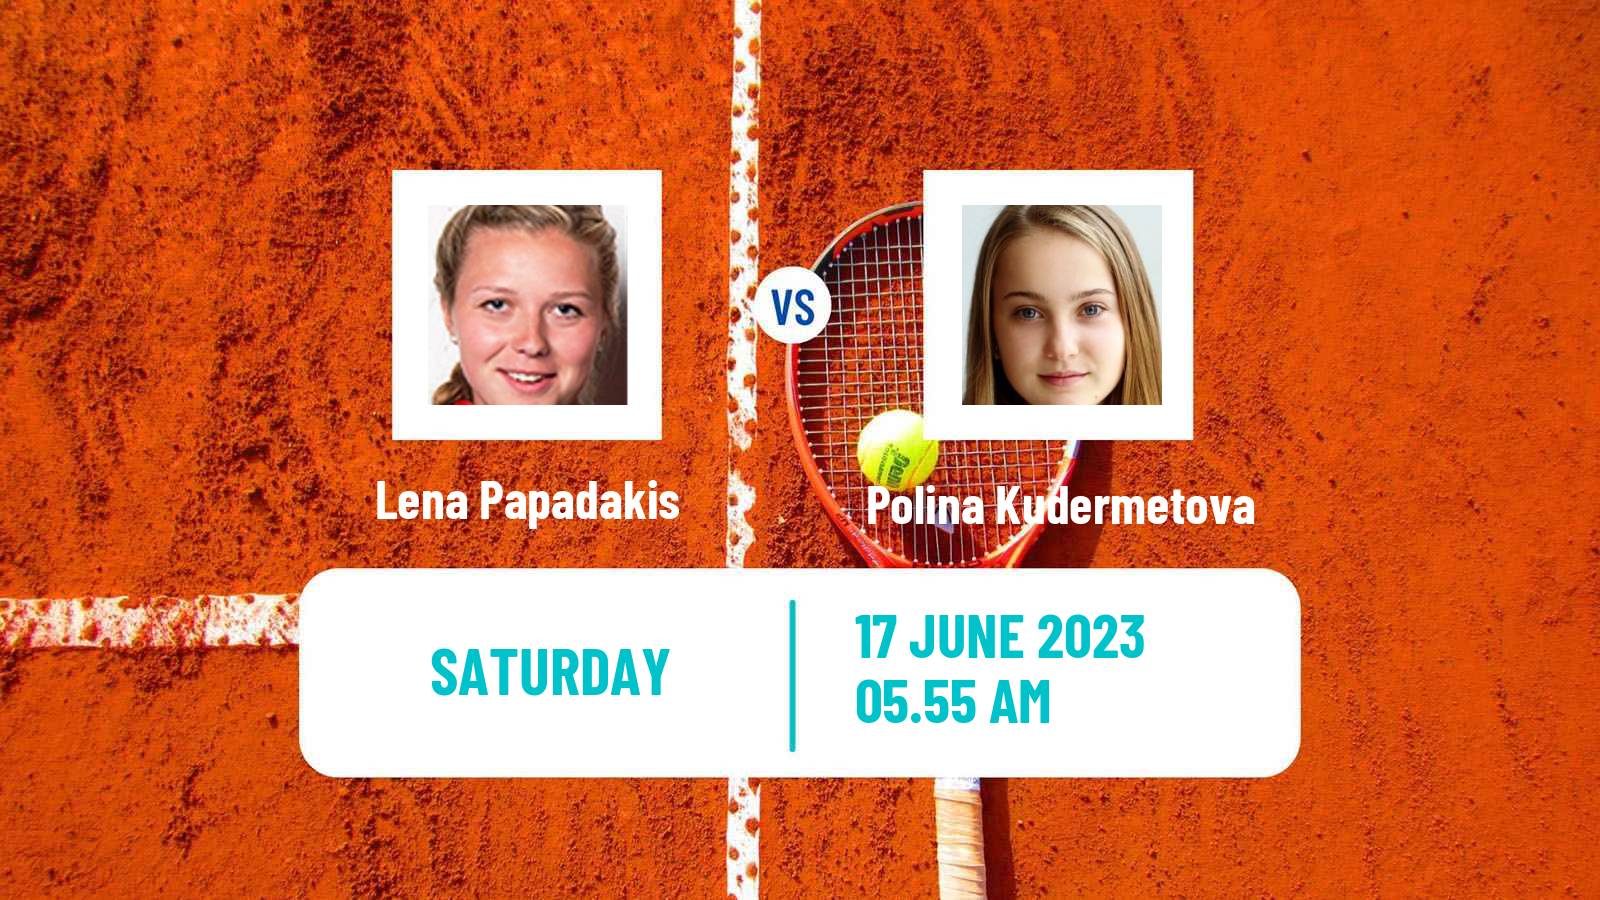 Tennis WTA Berlin Lena Papadakis - Polina Kudermetova